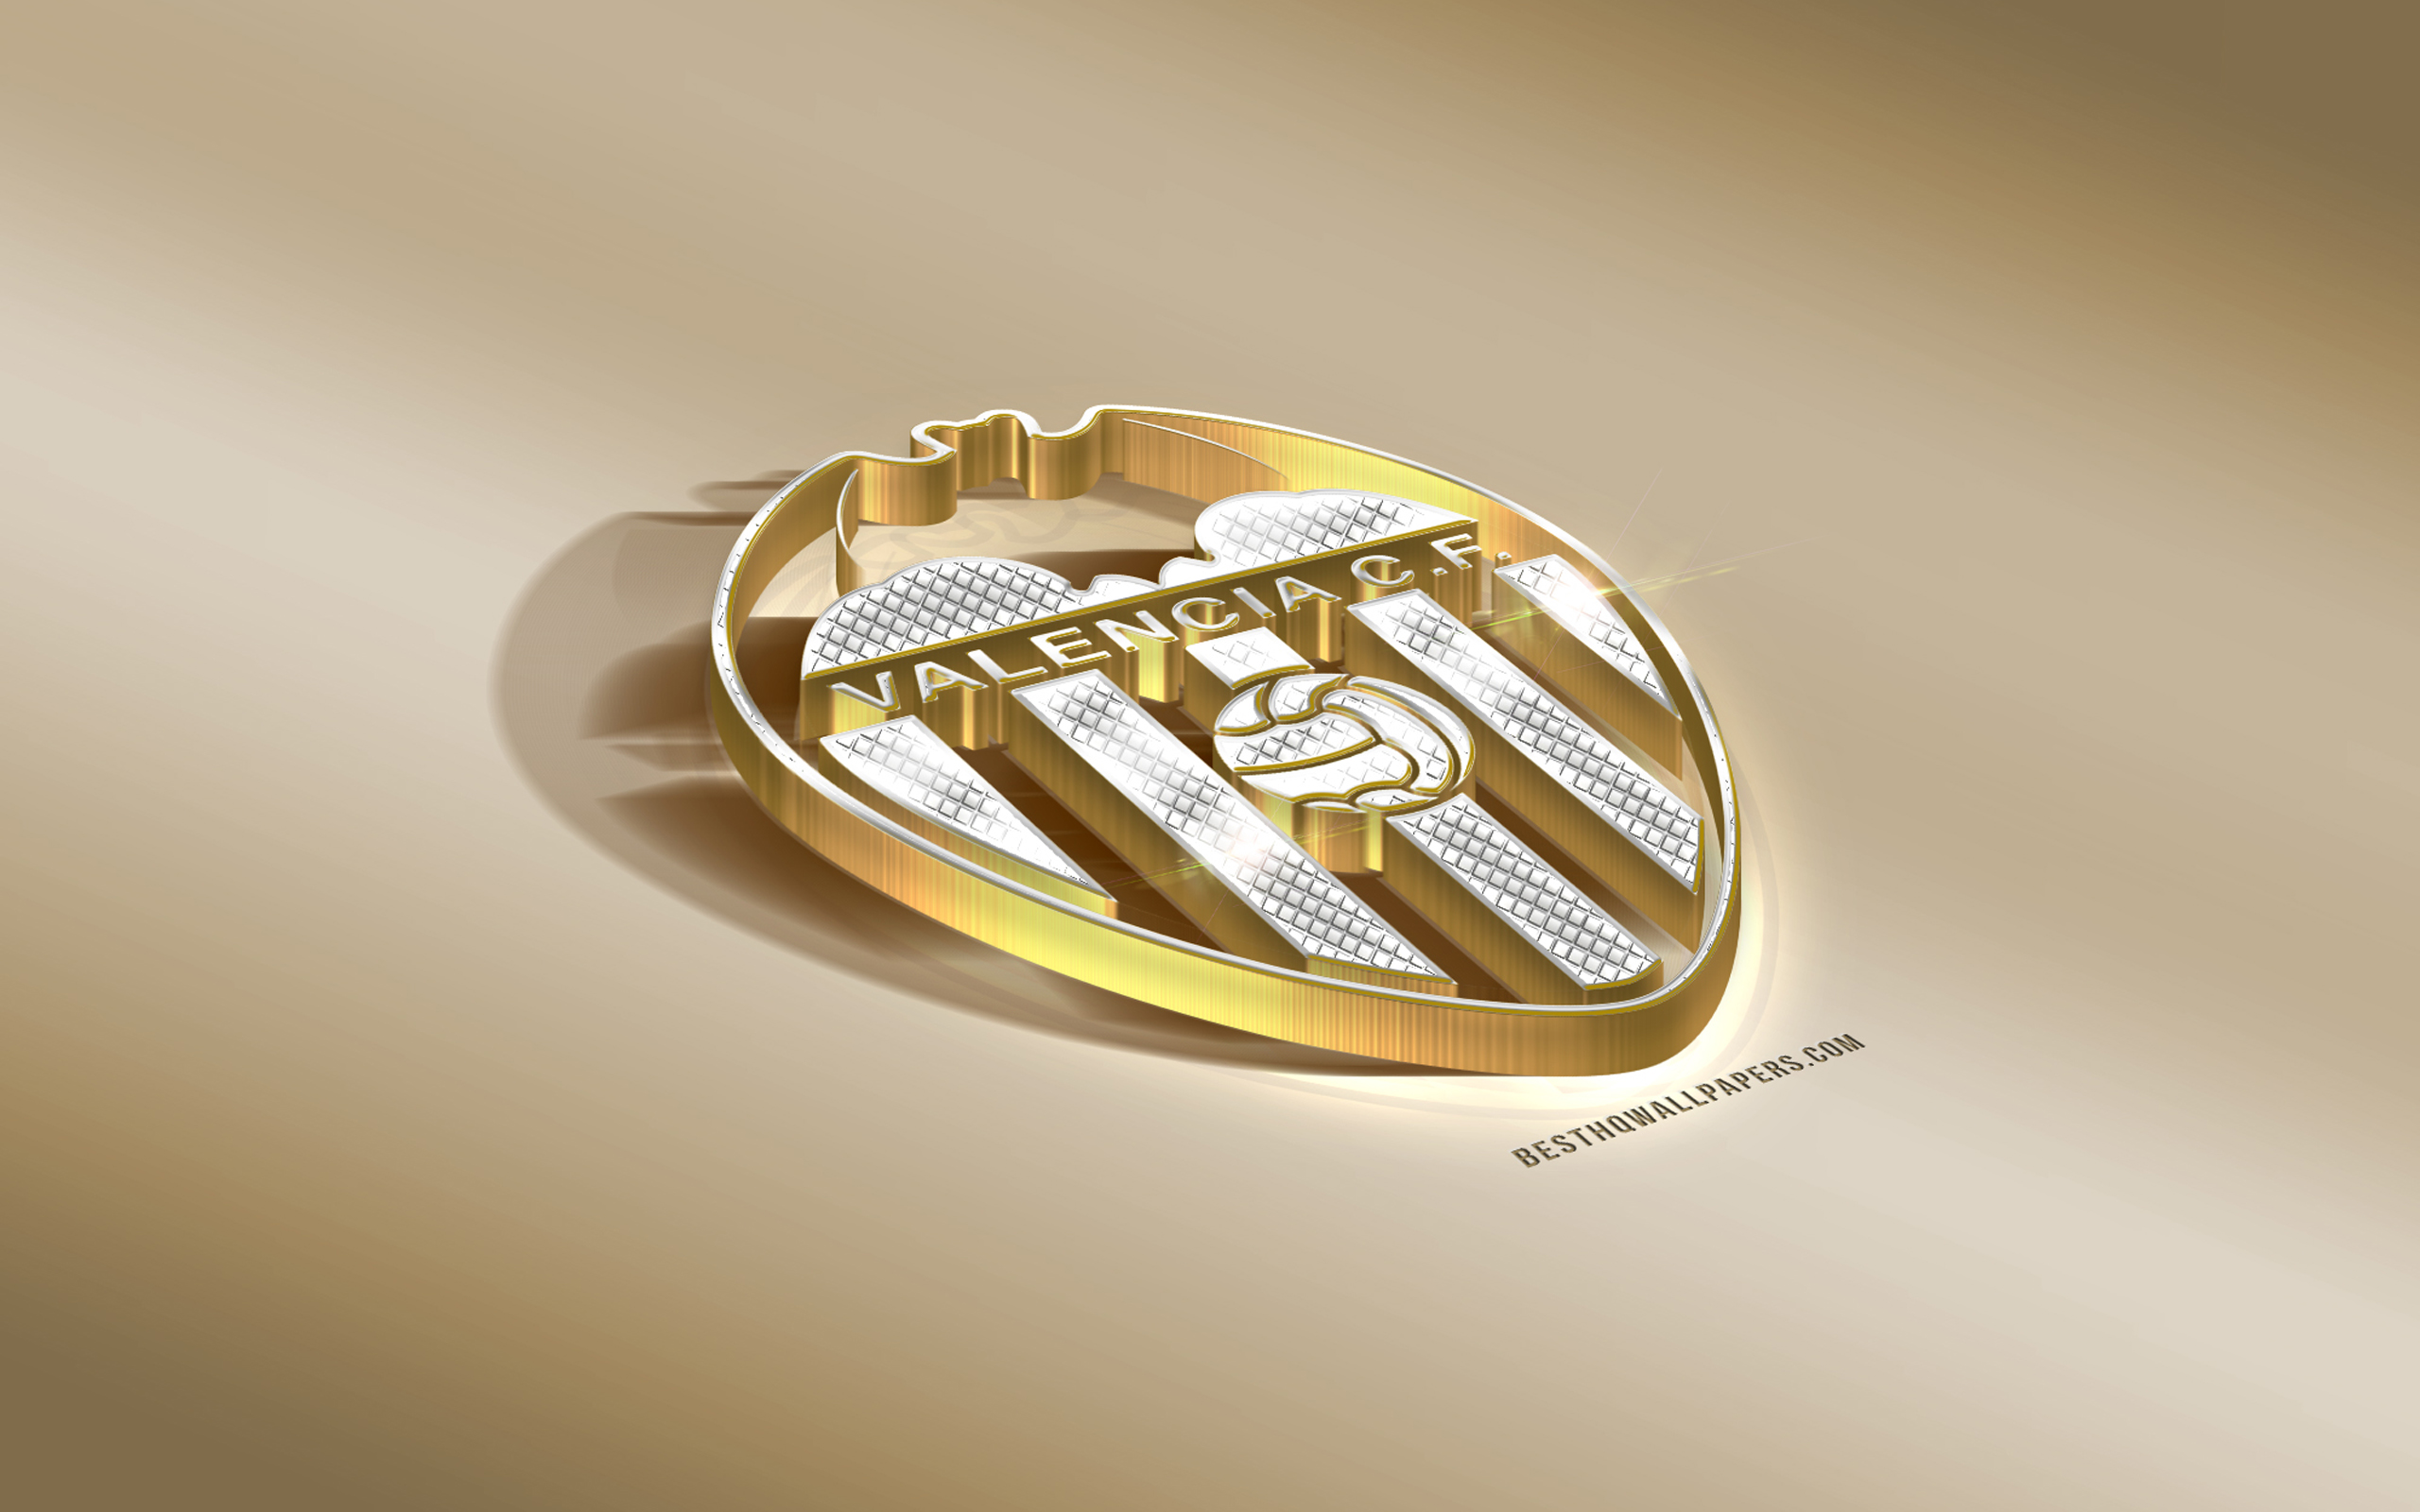 Emblem Logo Soccer Valencia Cf 2560x1600